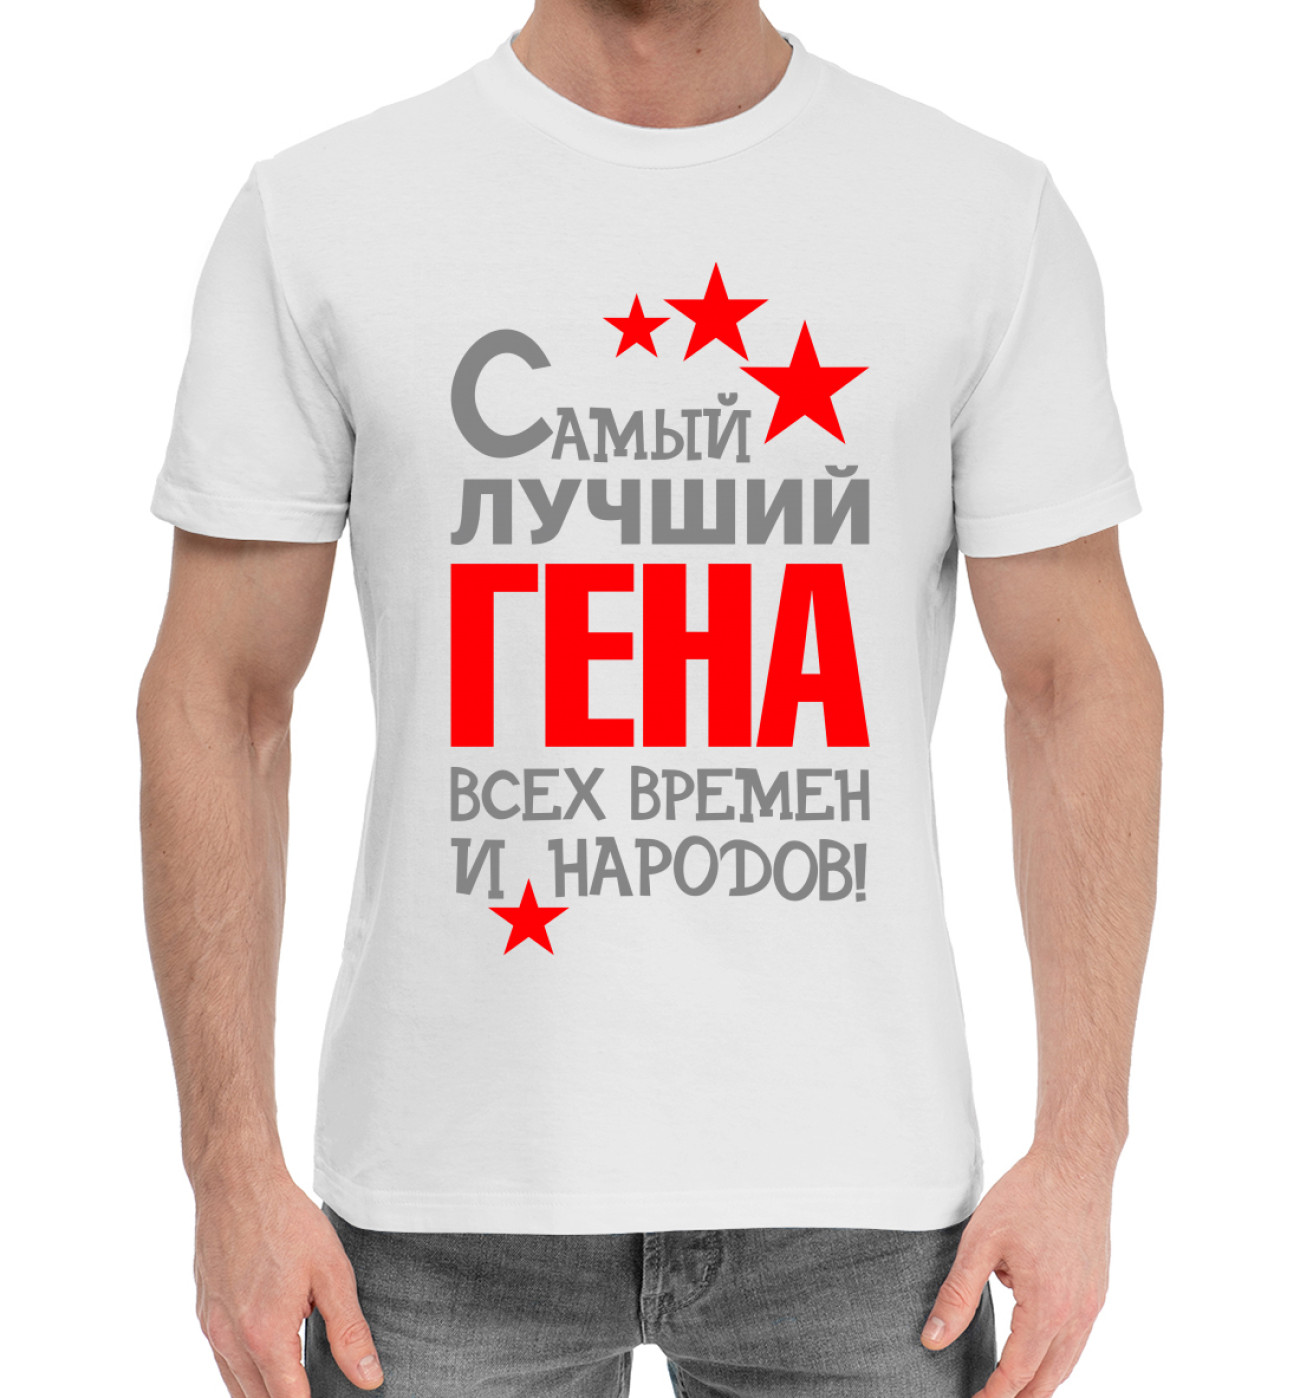 Мужская Хлопковая футболка Гена, артикул: IMR-126915-hfu-2